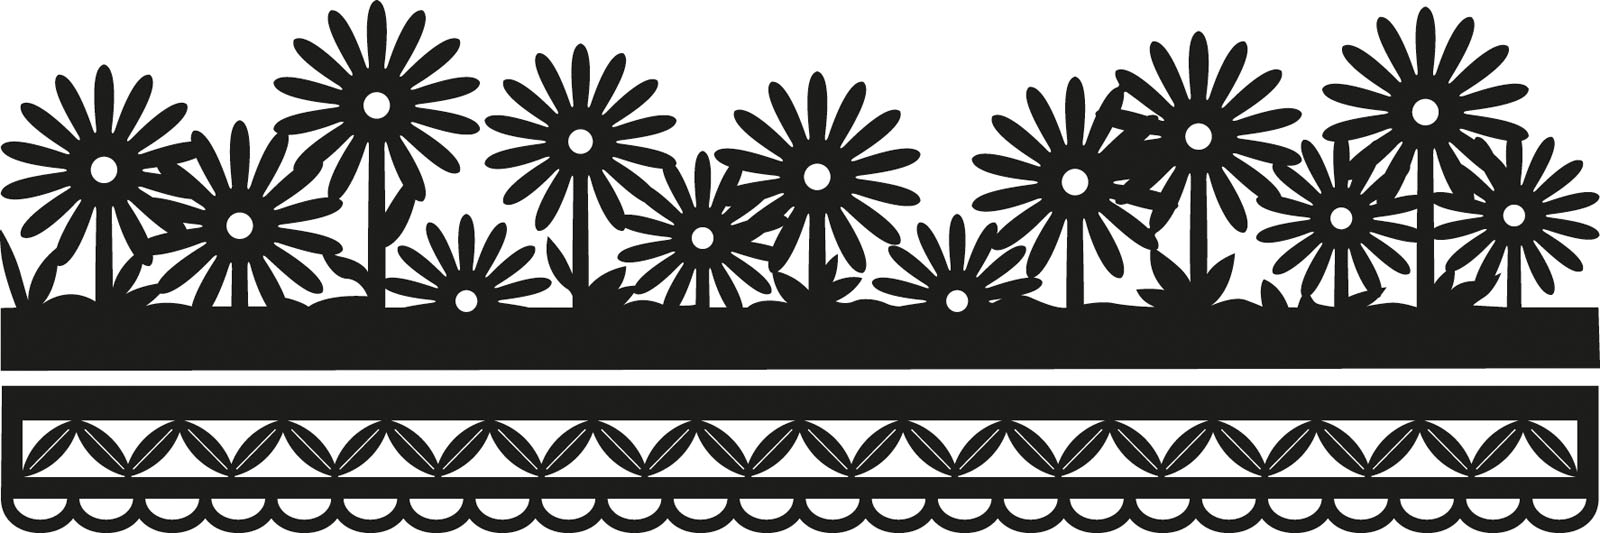 Marianne Design • Craftables plantilla de corte para embossing Anja's Flower border